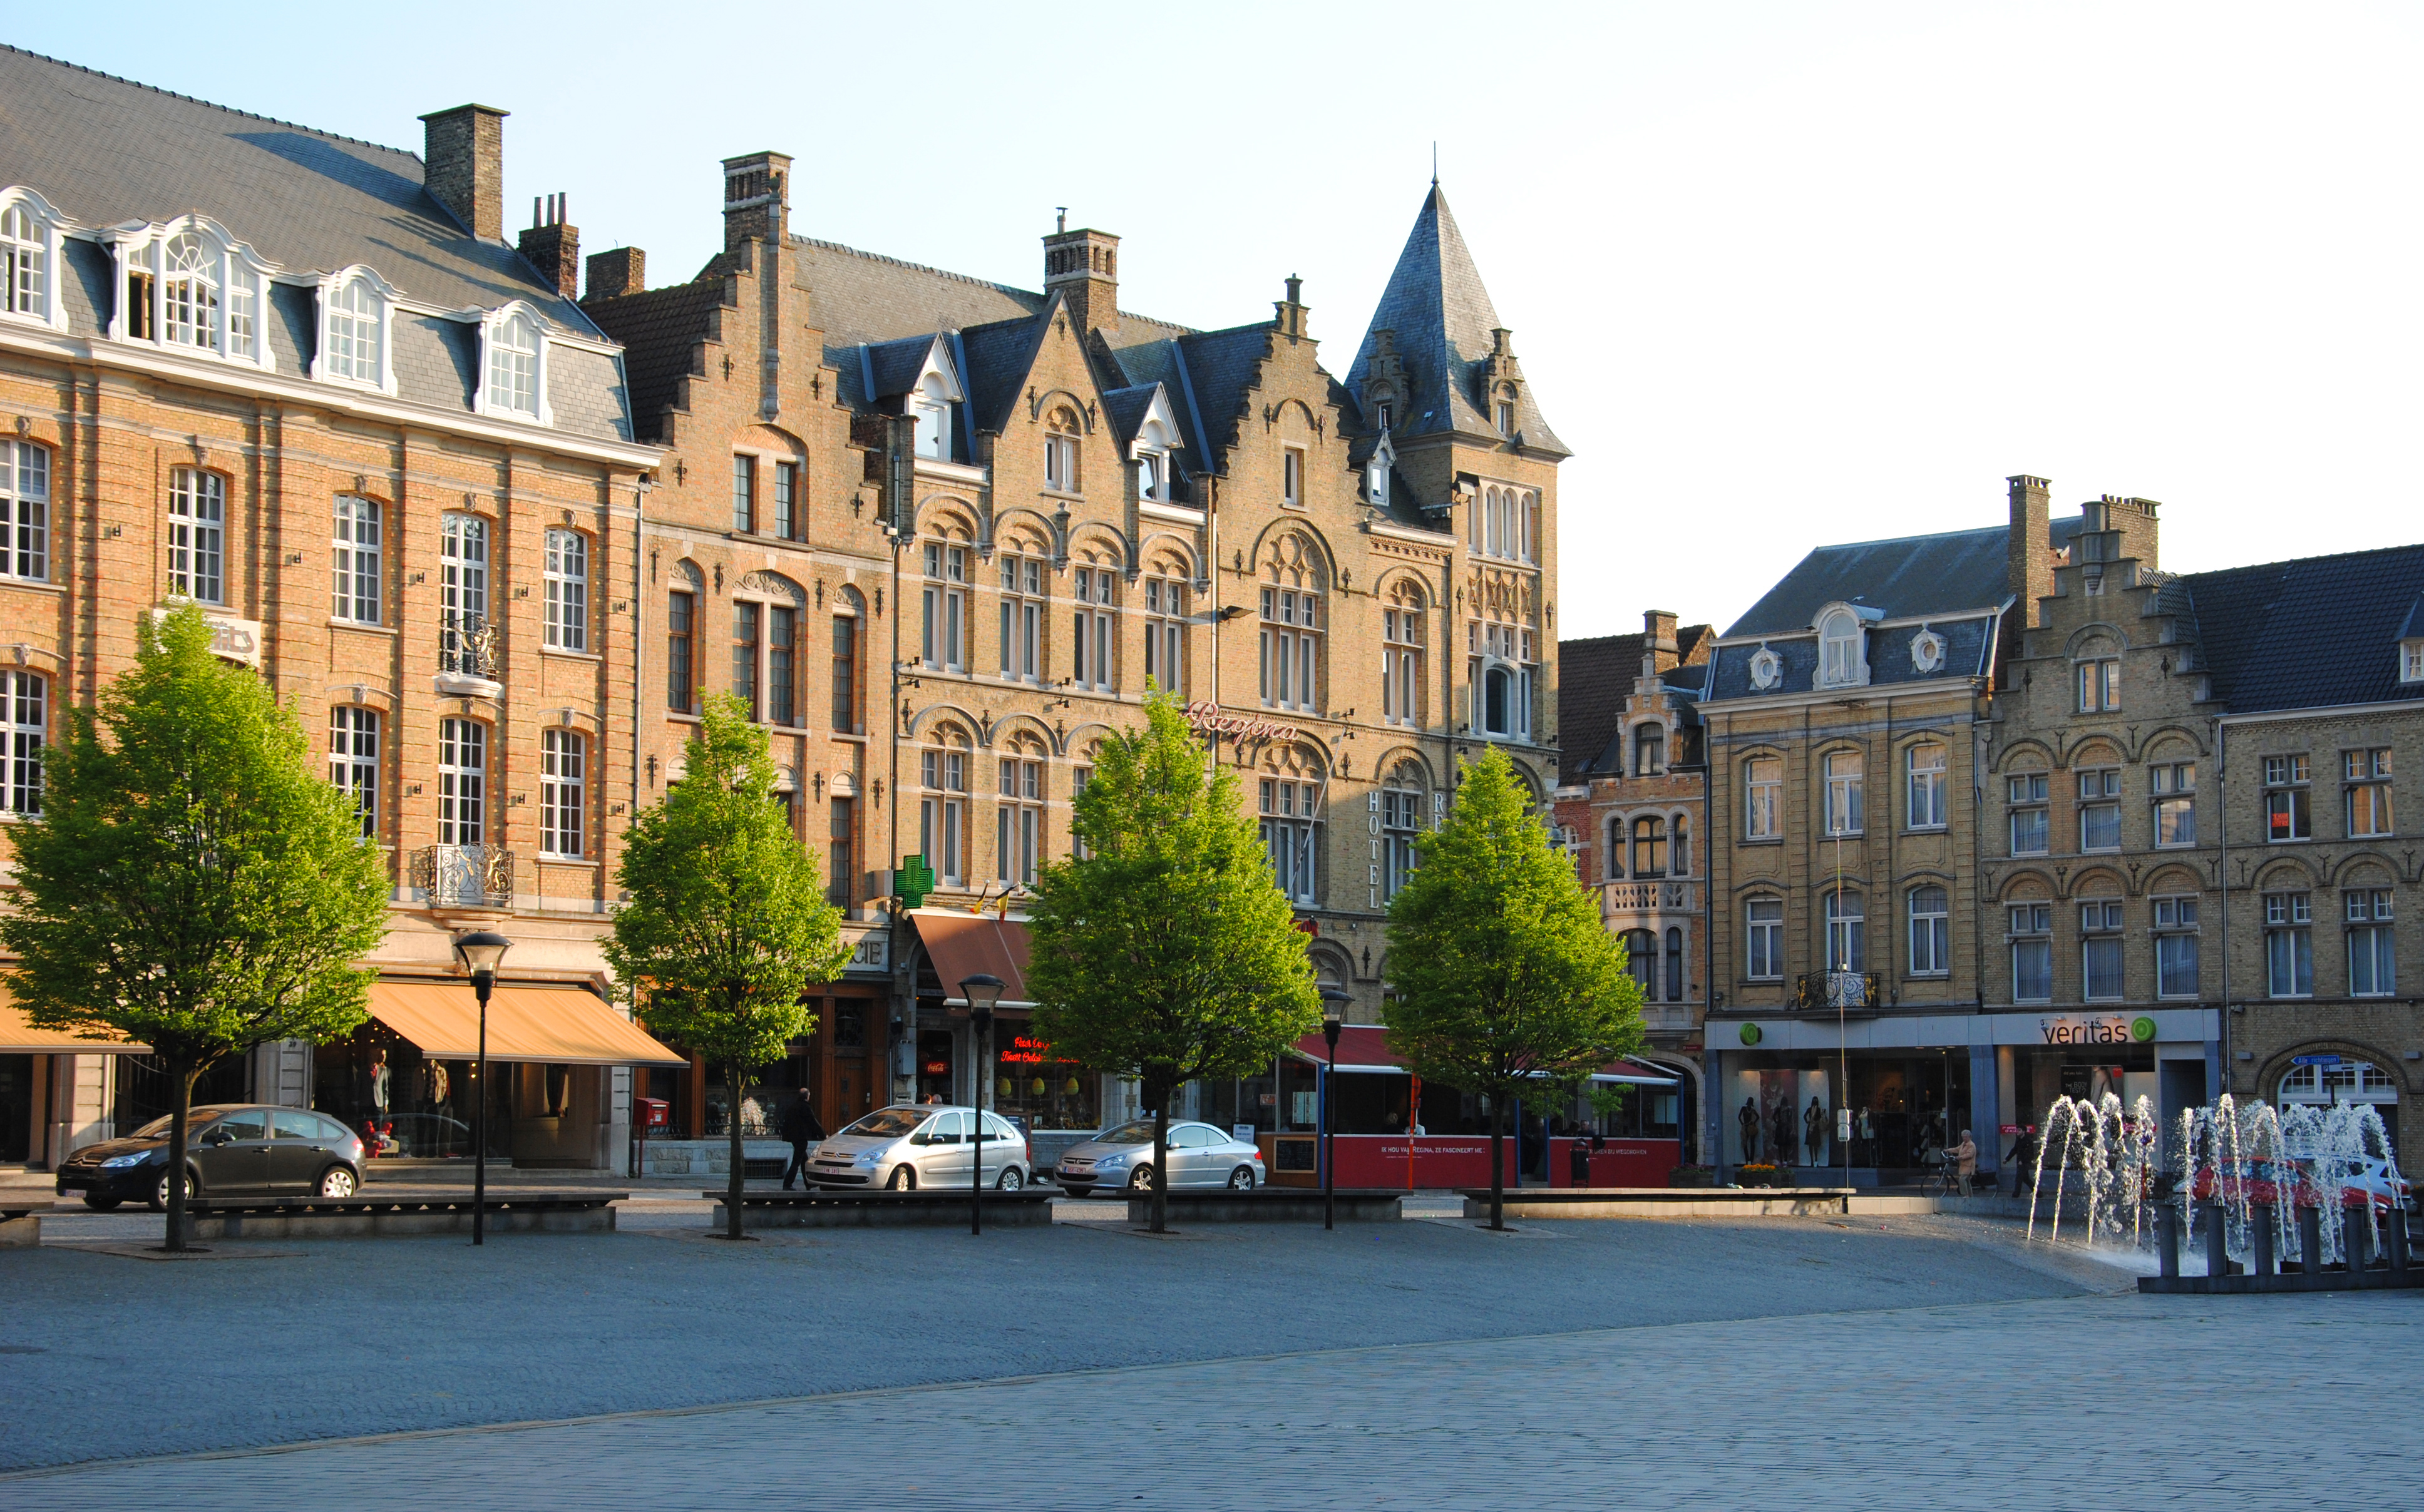 File:Belgian-city-ypres.jpg - Wikimedia Commons